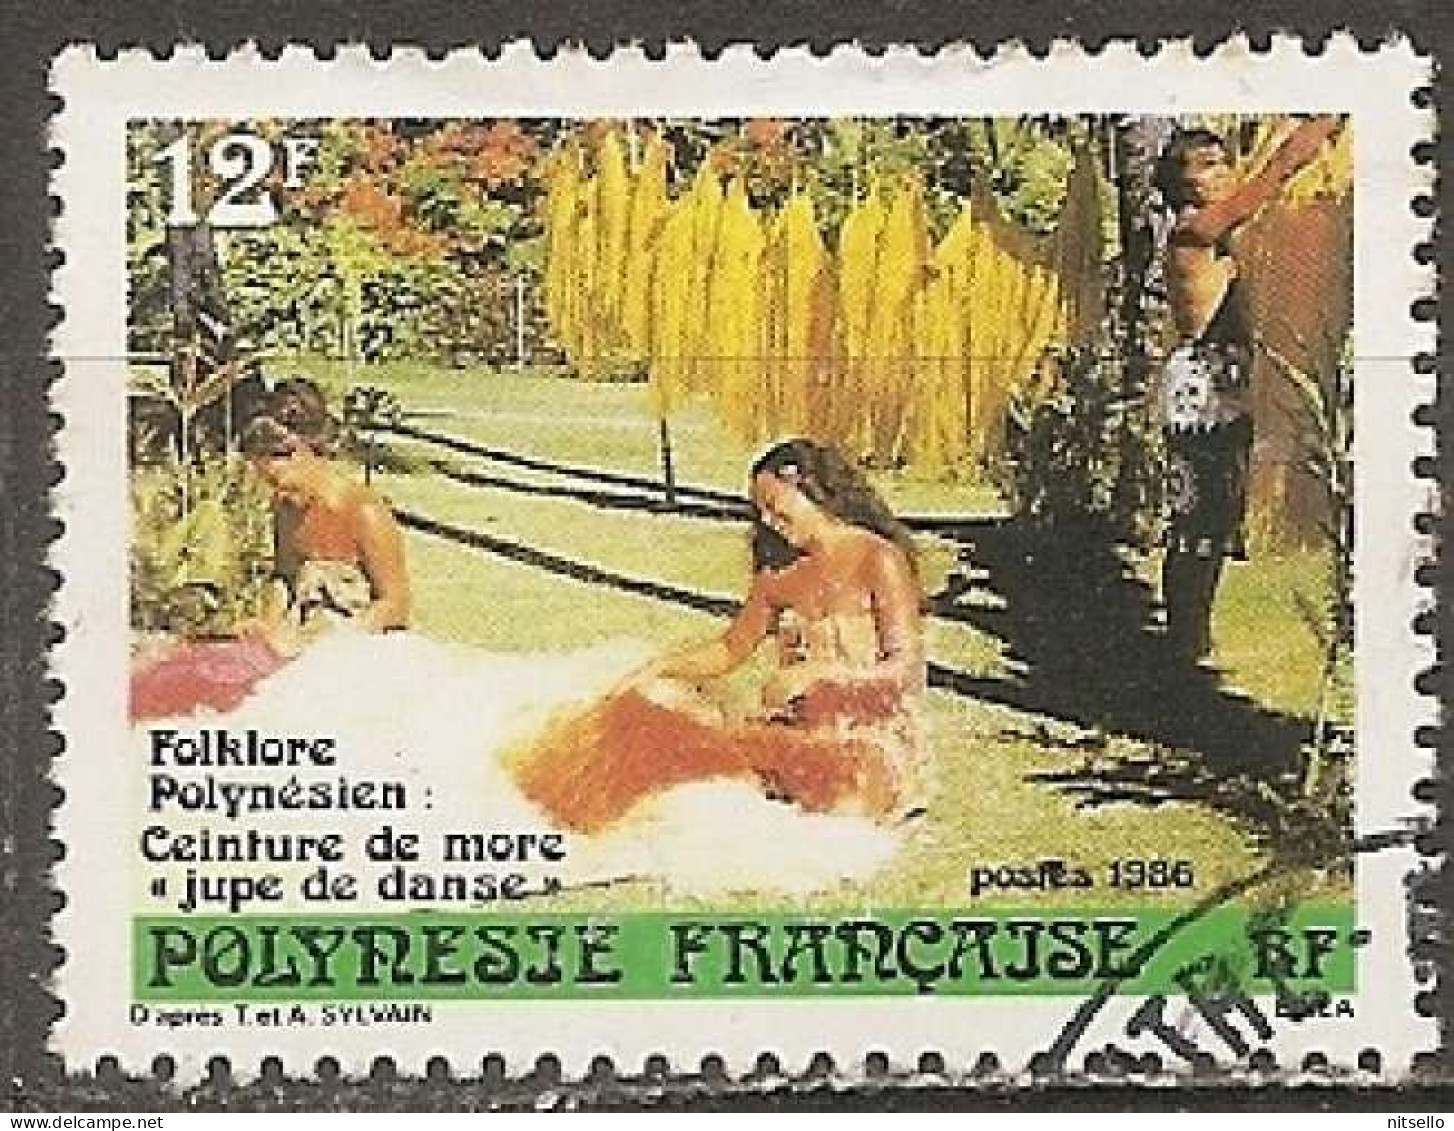 LOTE 2202A ///  (C010)  POLINESIA FRANCESA  - YVERT Nº:265   ¡¡¡ OFERTA - LIQUIDATION - JE LIQUIDE !!! - Used Stamps